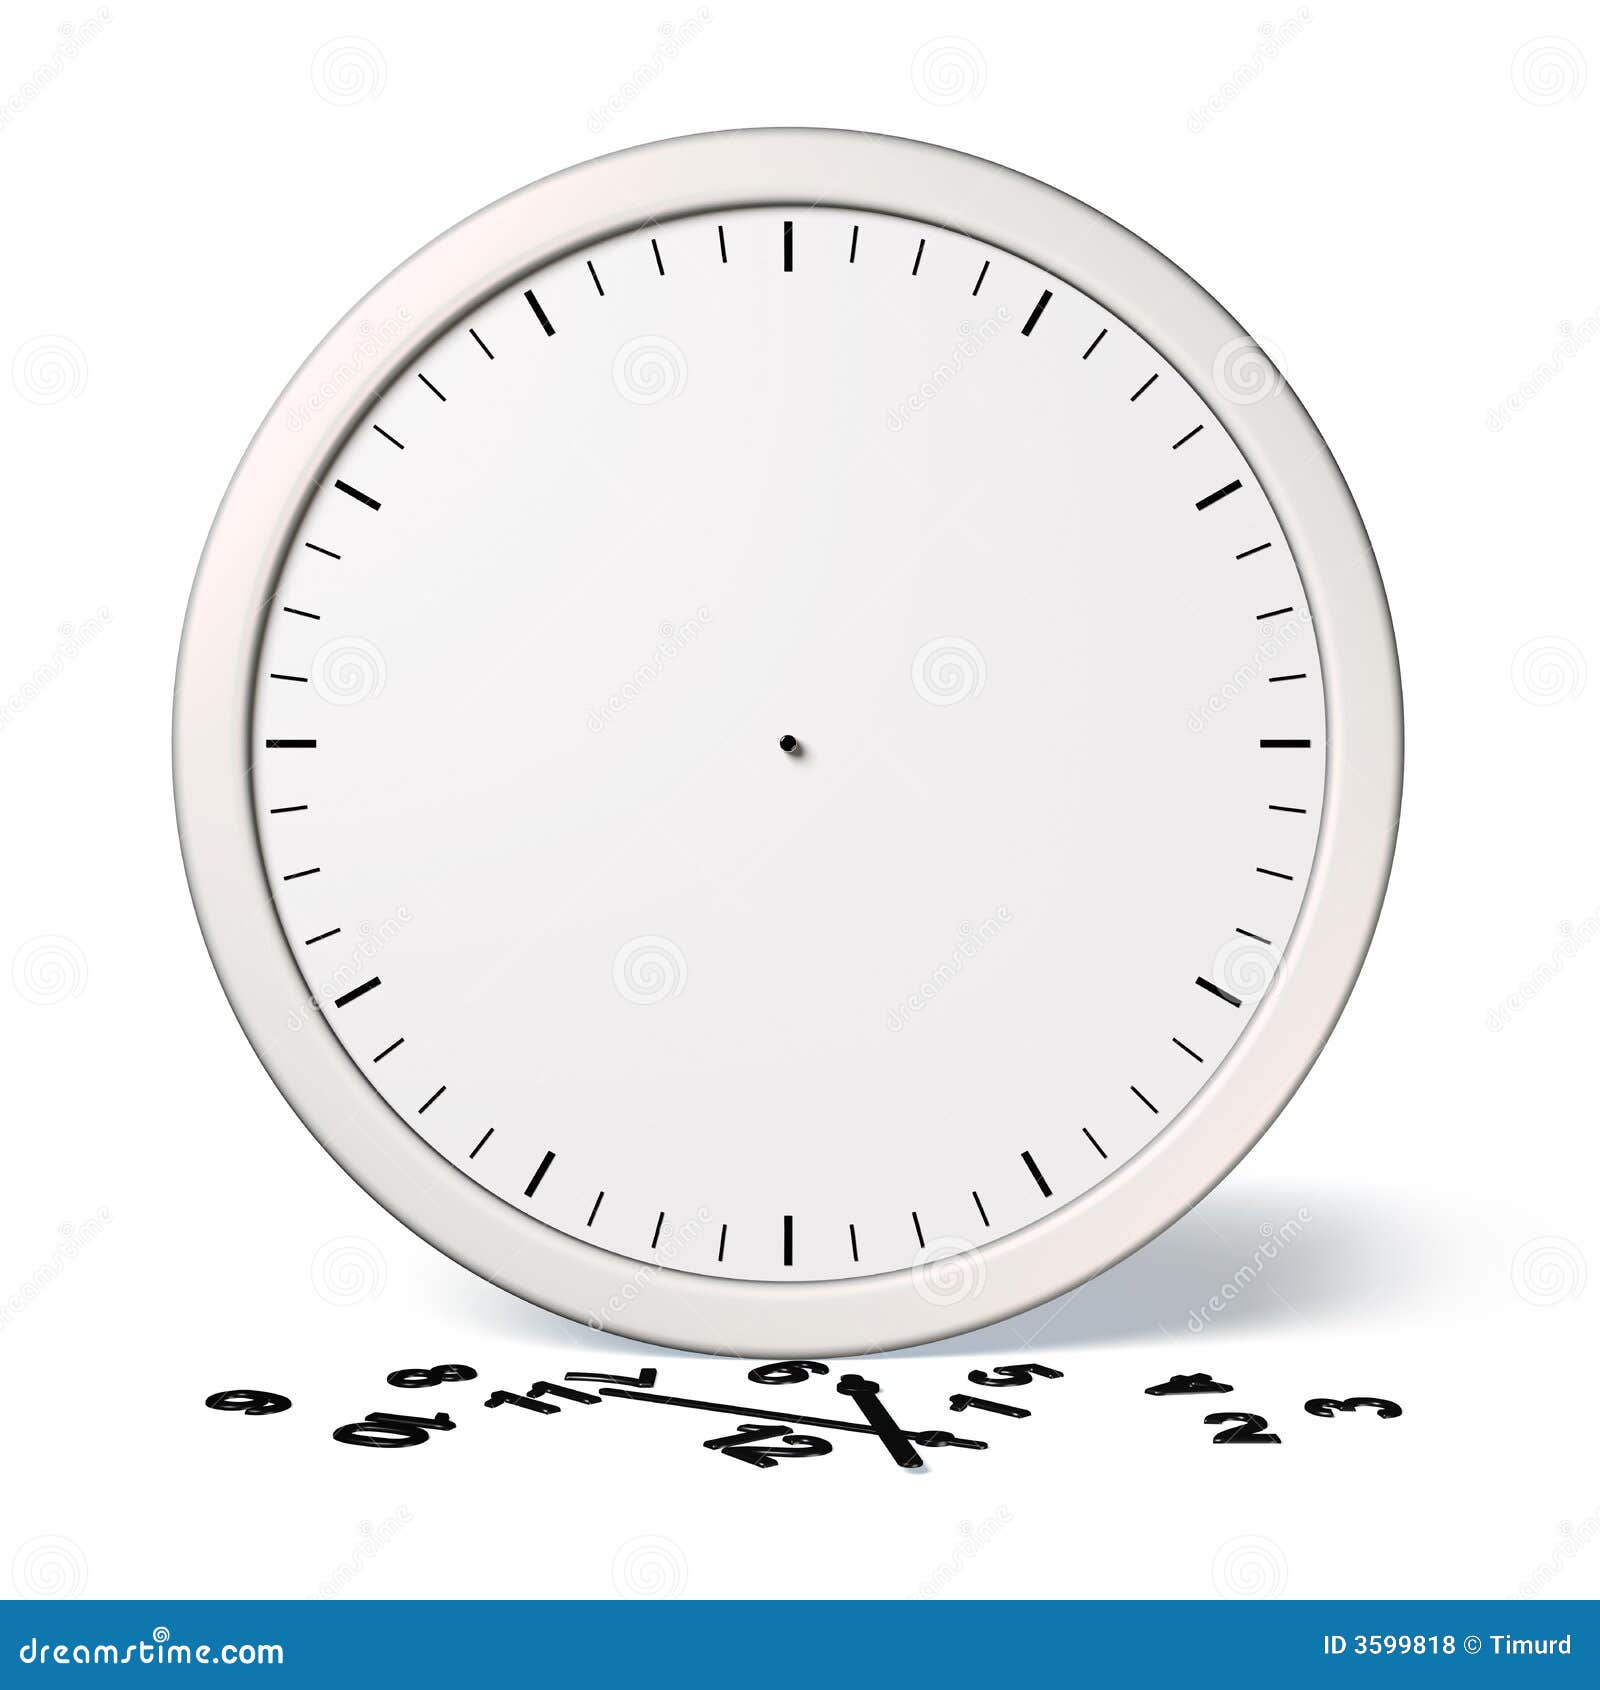 White broken clock with black numerals